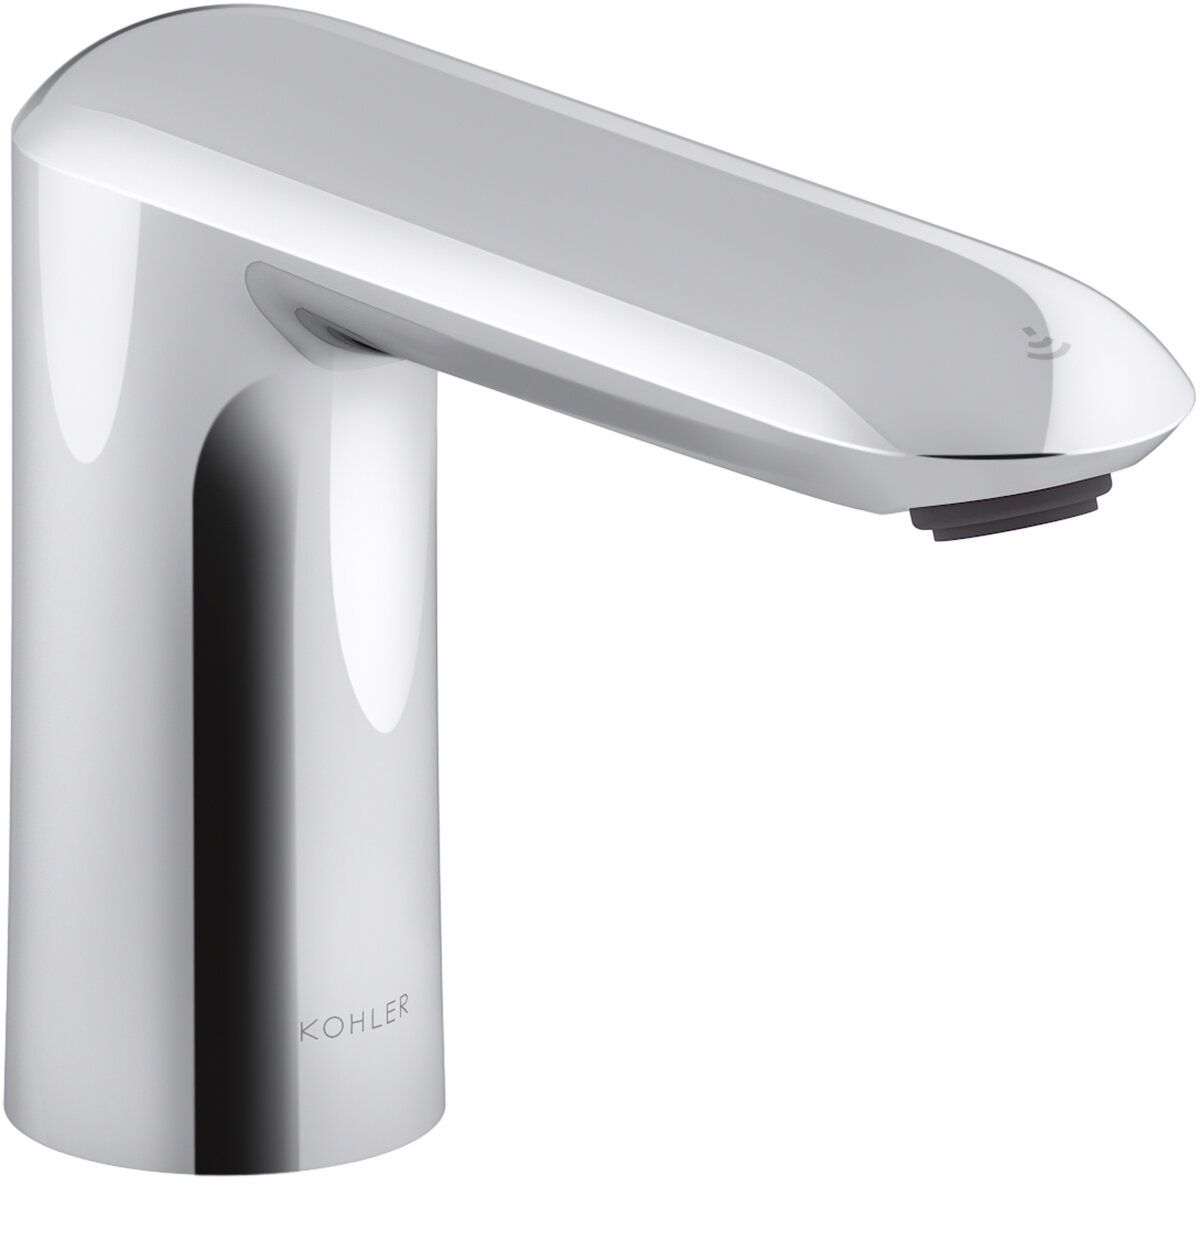 Kumin Ac Touchless Bathroom Sink Faucet With Kinesis Sensor Technology Ac Powered